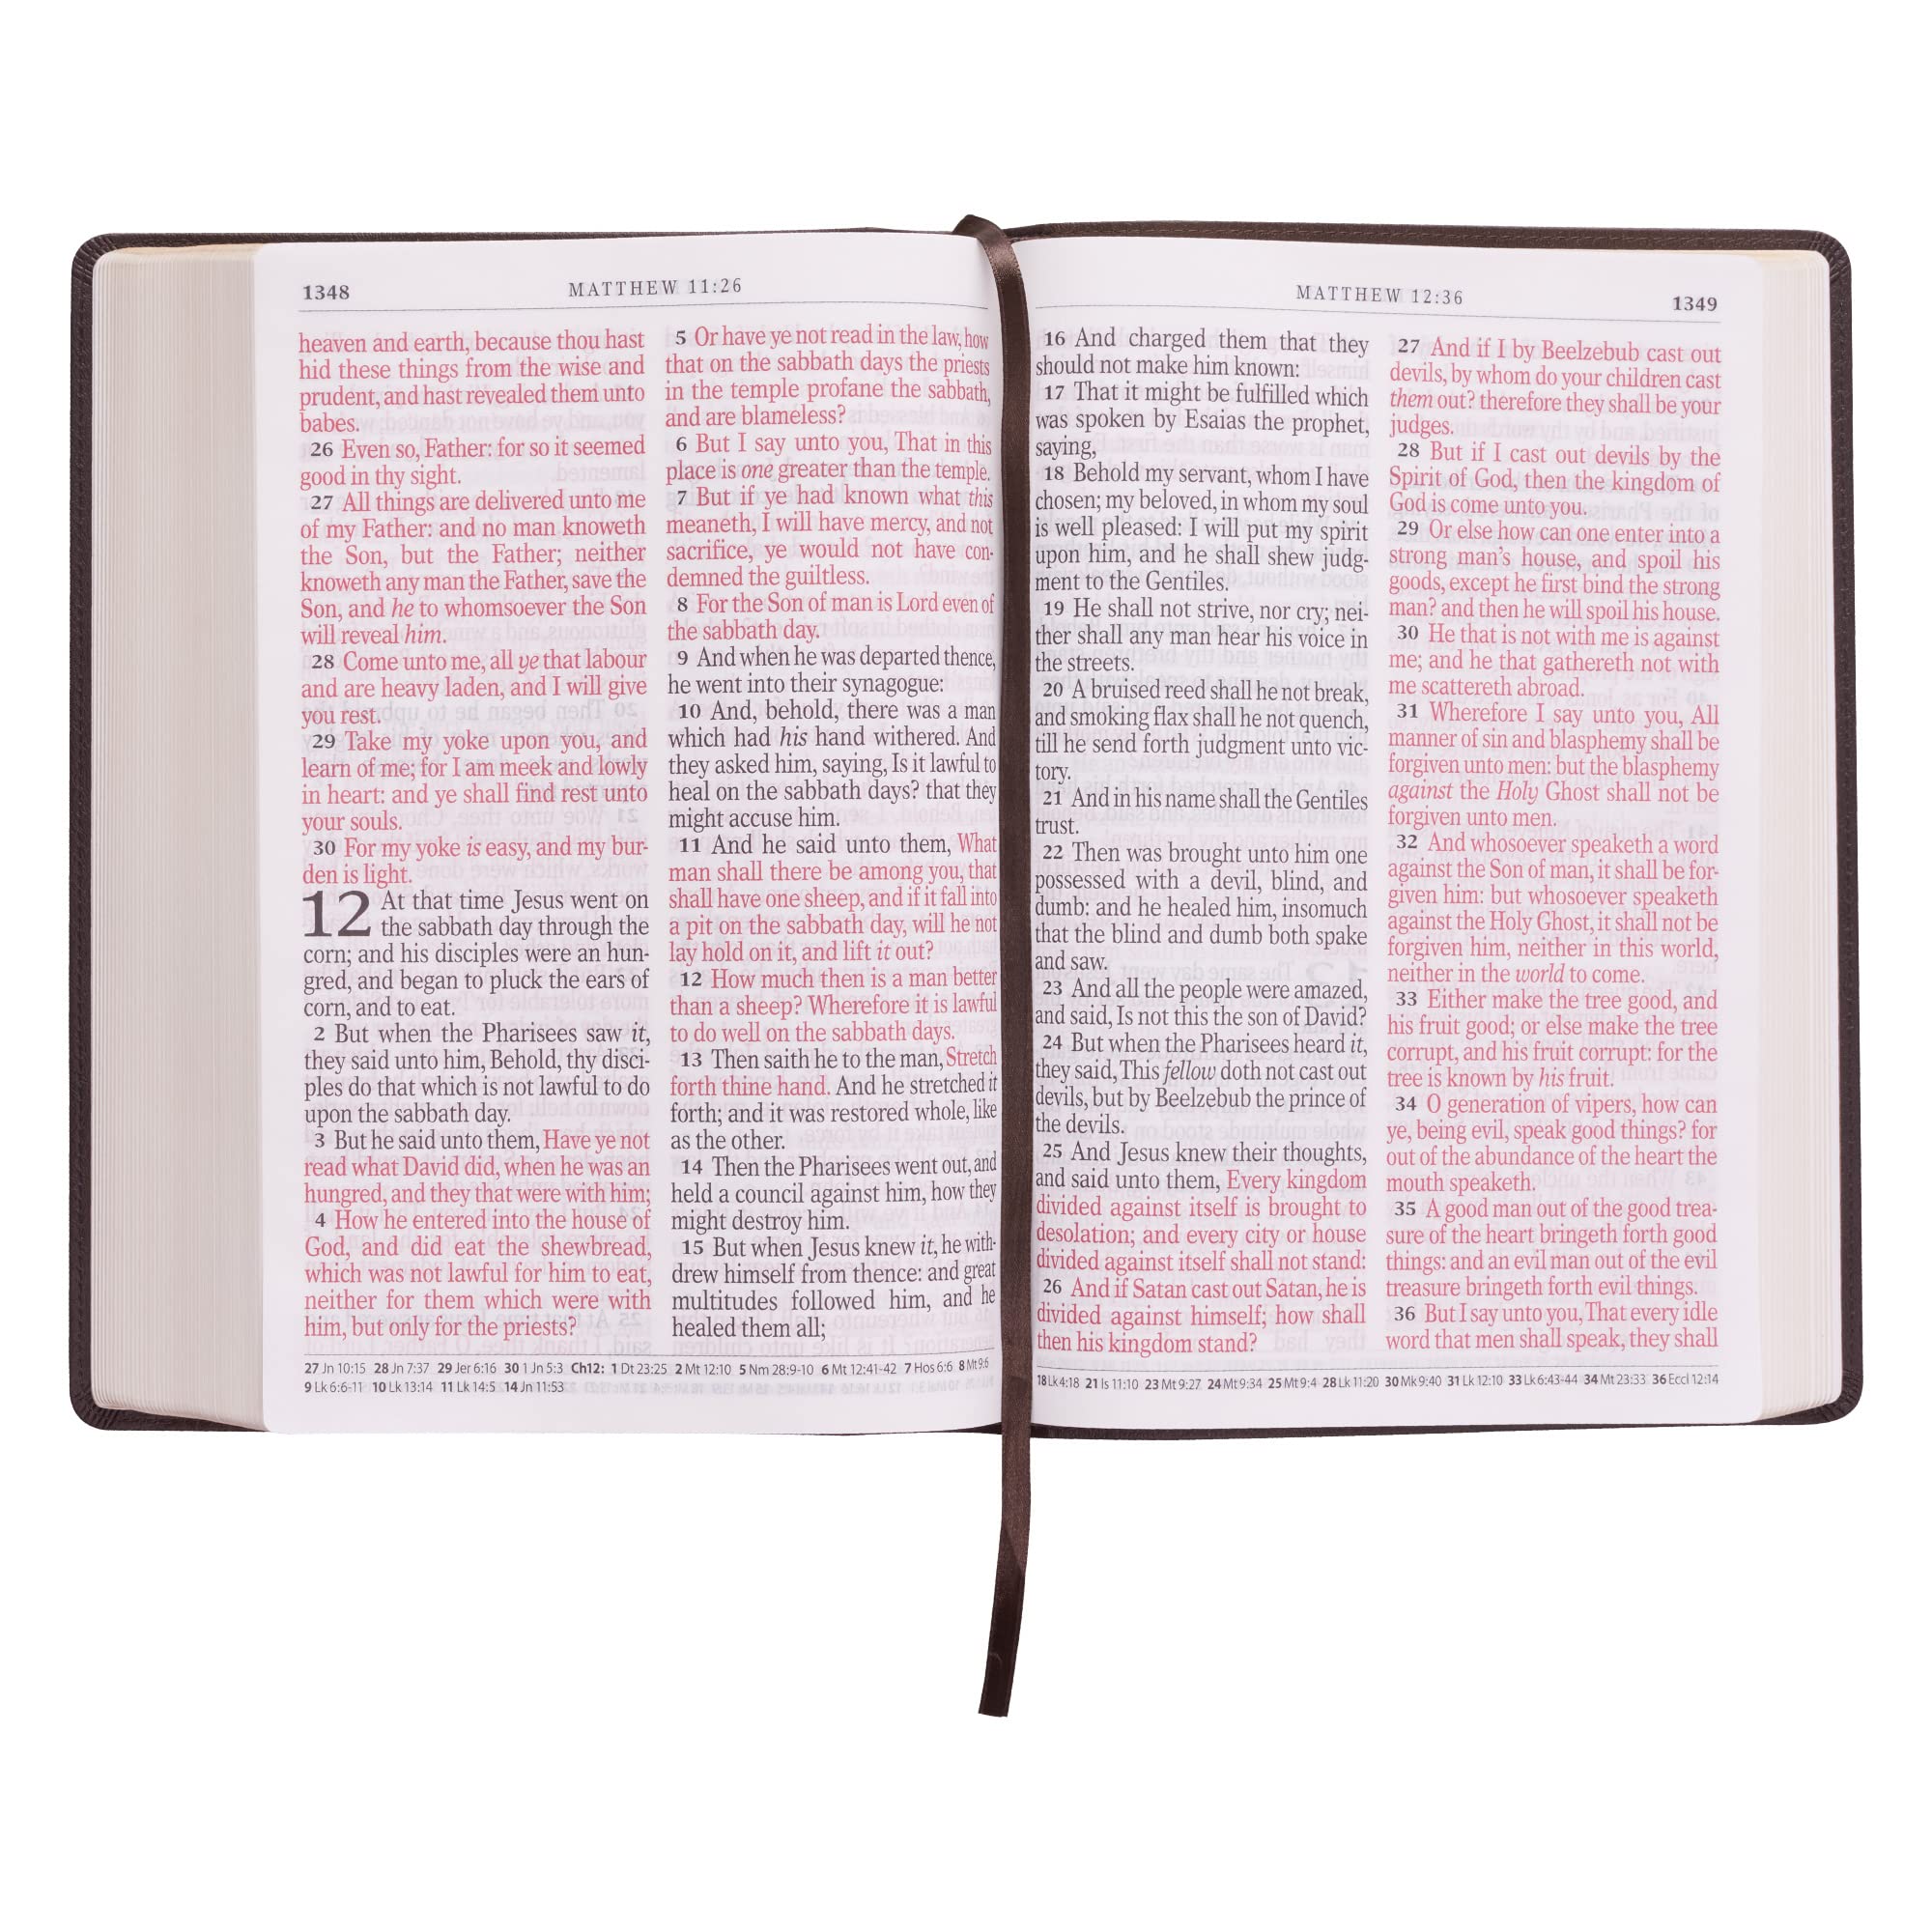 KJV Holy Bible, Super Giant Print Faux Leather Red Letter Edition - Ribbon Marker, King James Version, Dark Brown